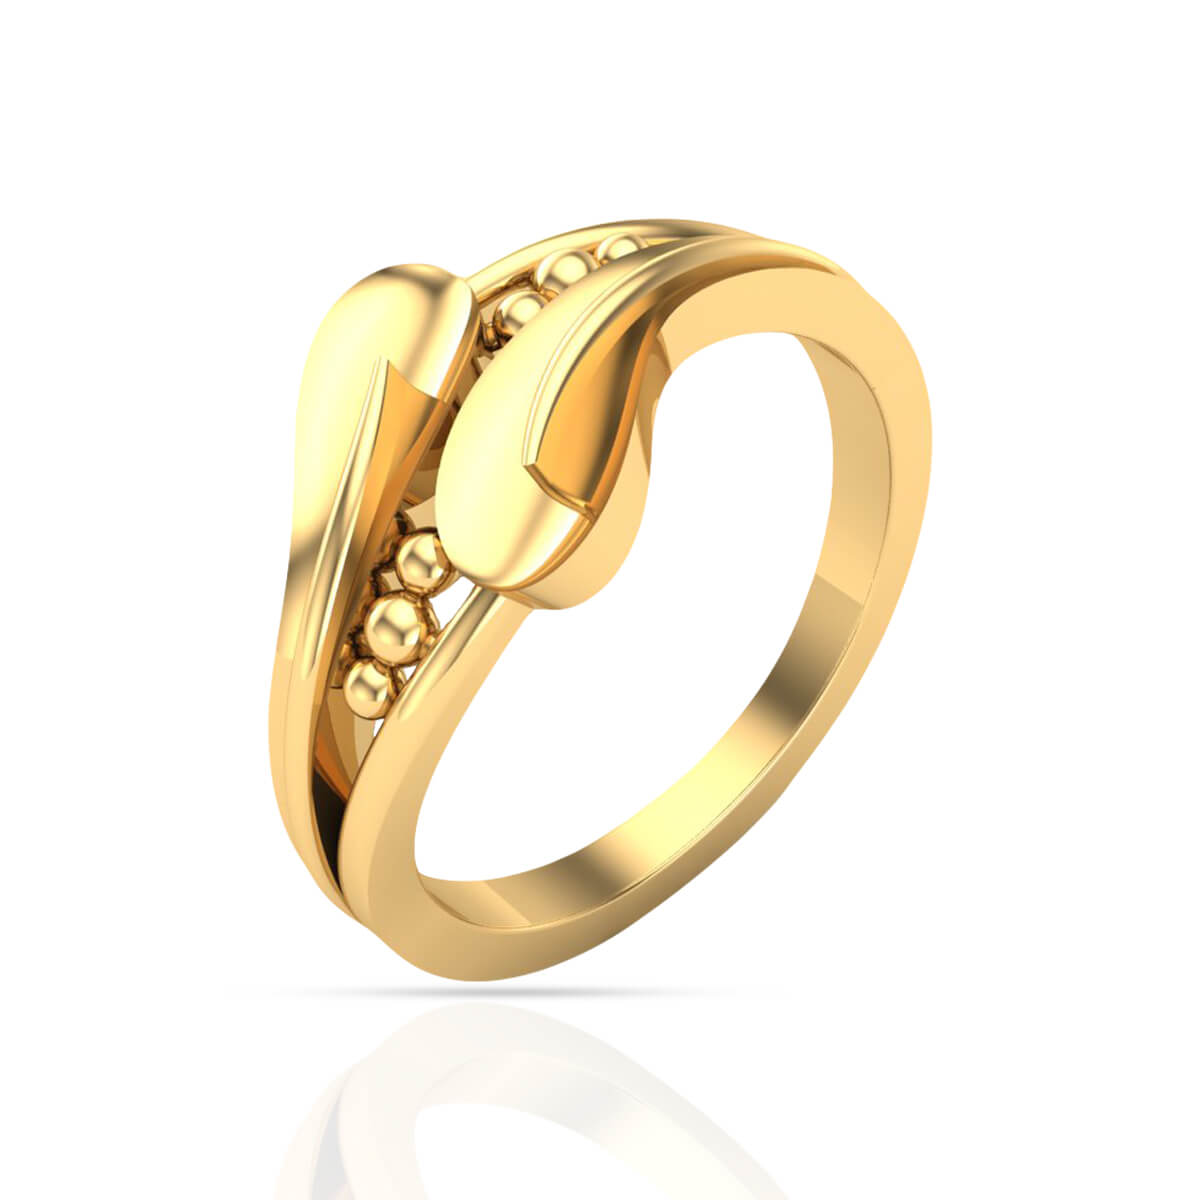 New Ladies ring Design || ||... - JEWELLERY GARDEN PVT LTD | Facebook-gemektower.com.vn